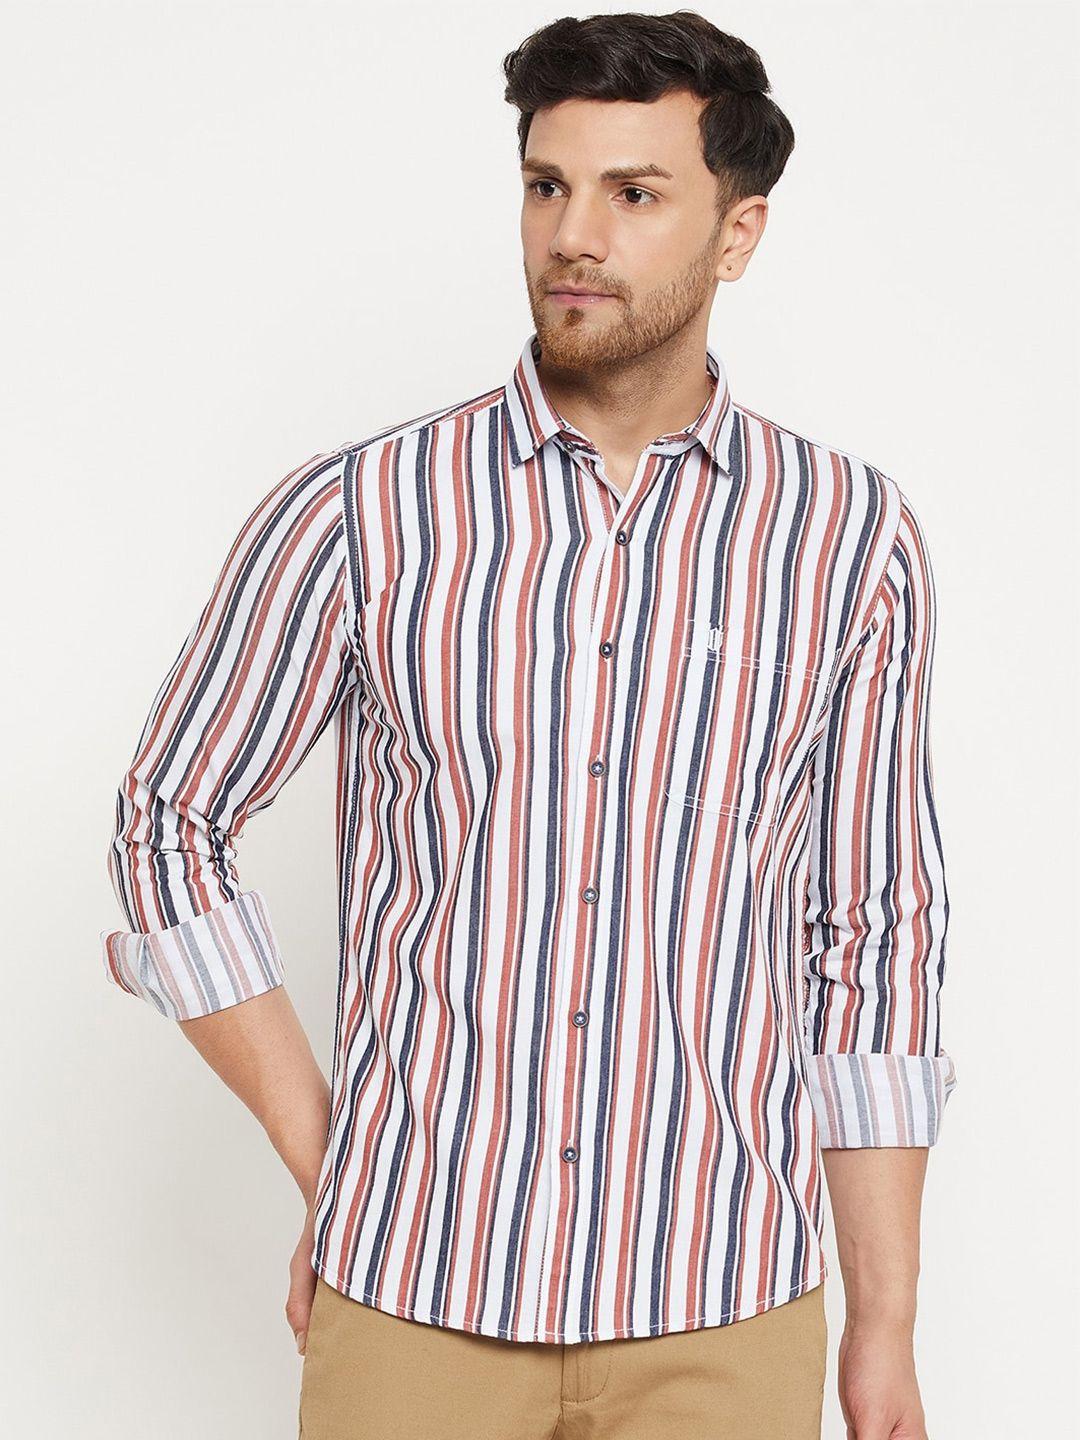 duke slim fit striped spread collar cotton casual shirt